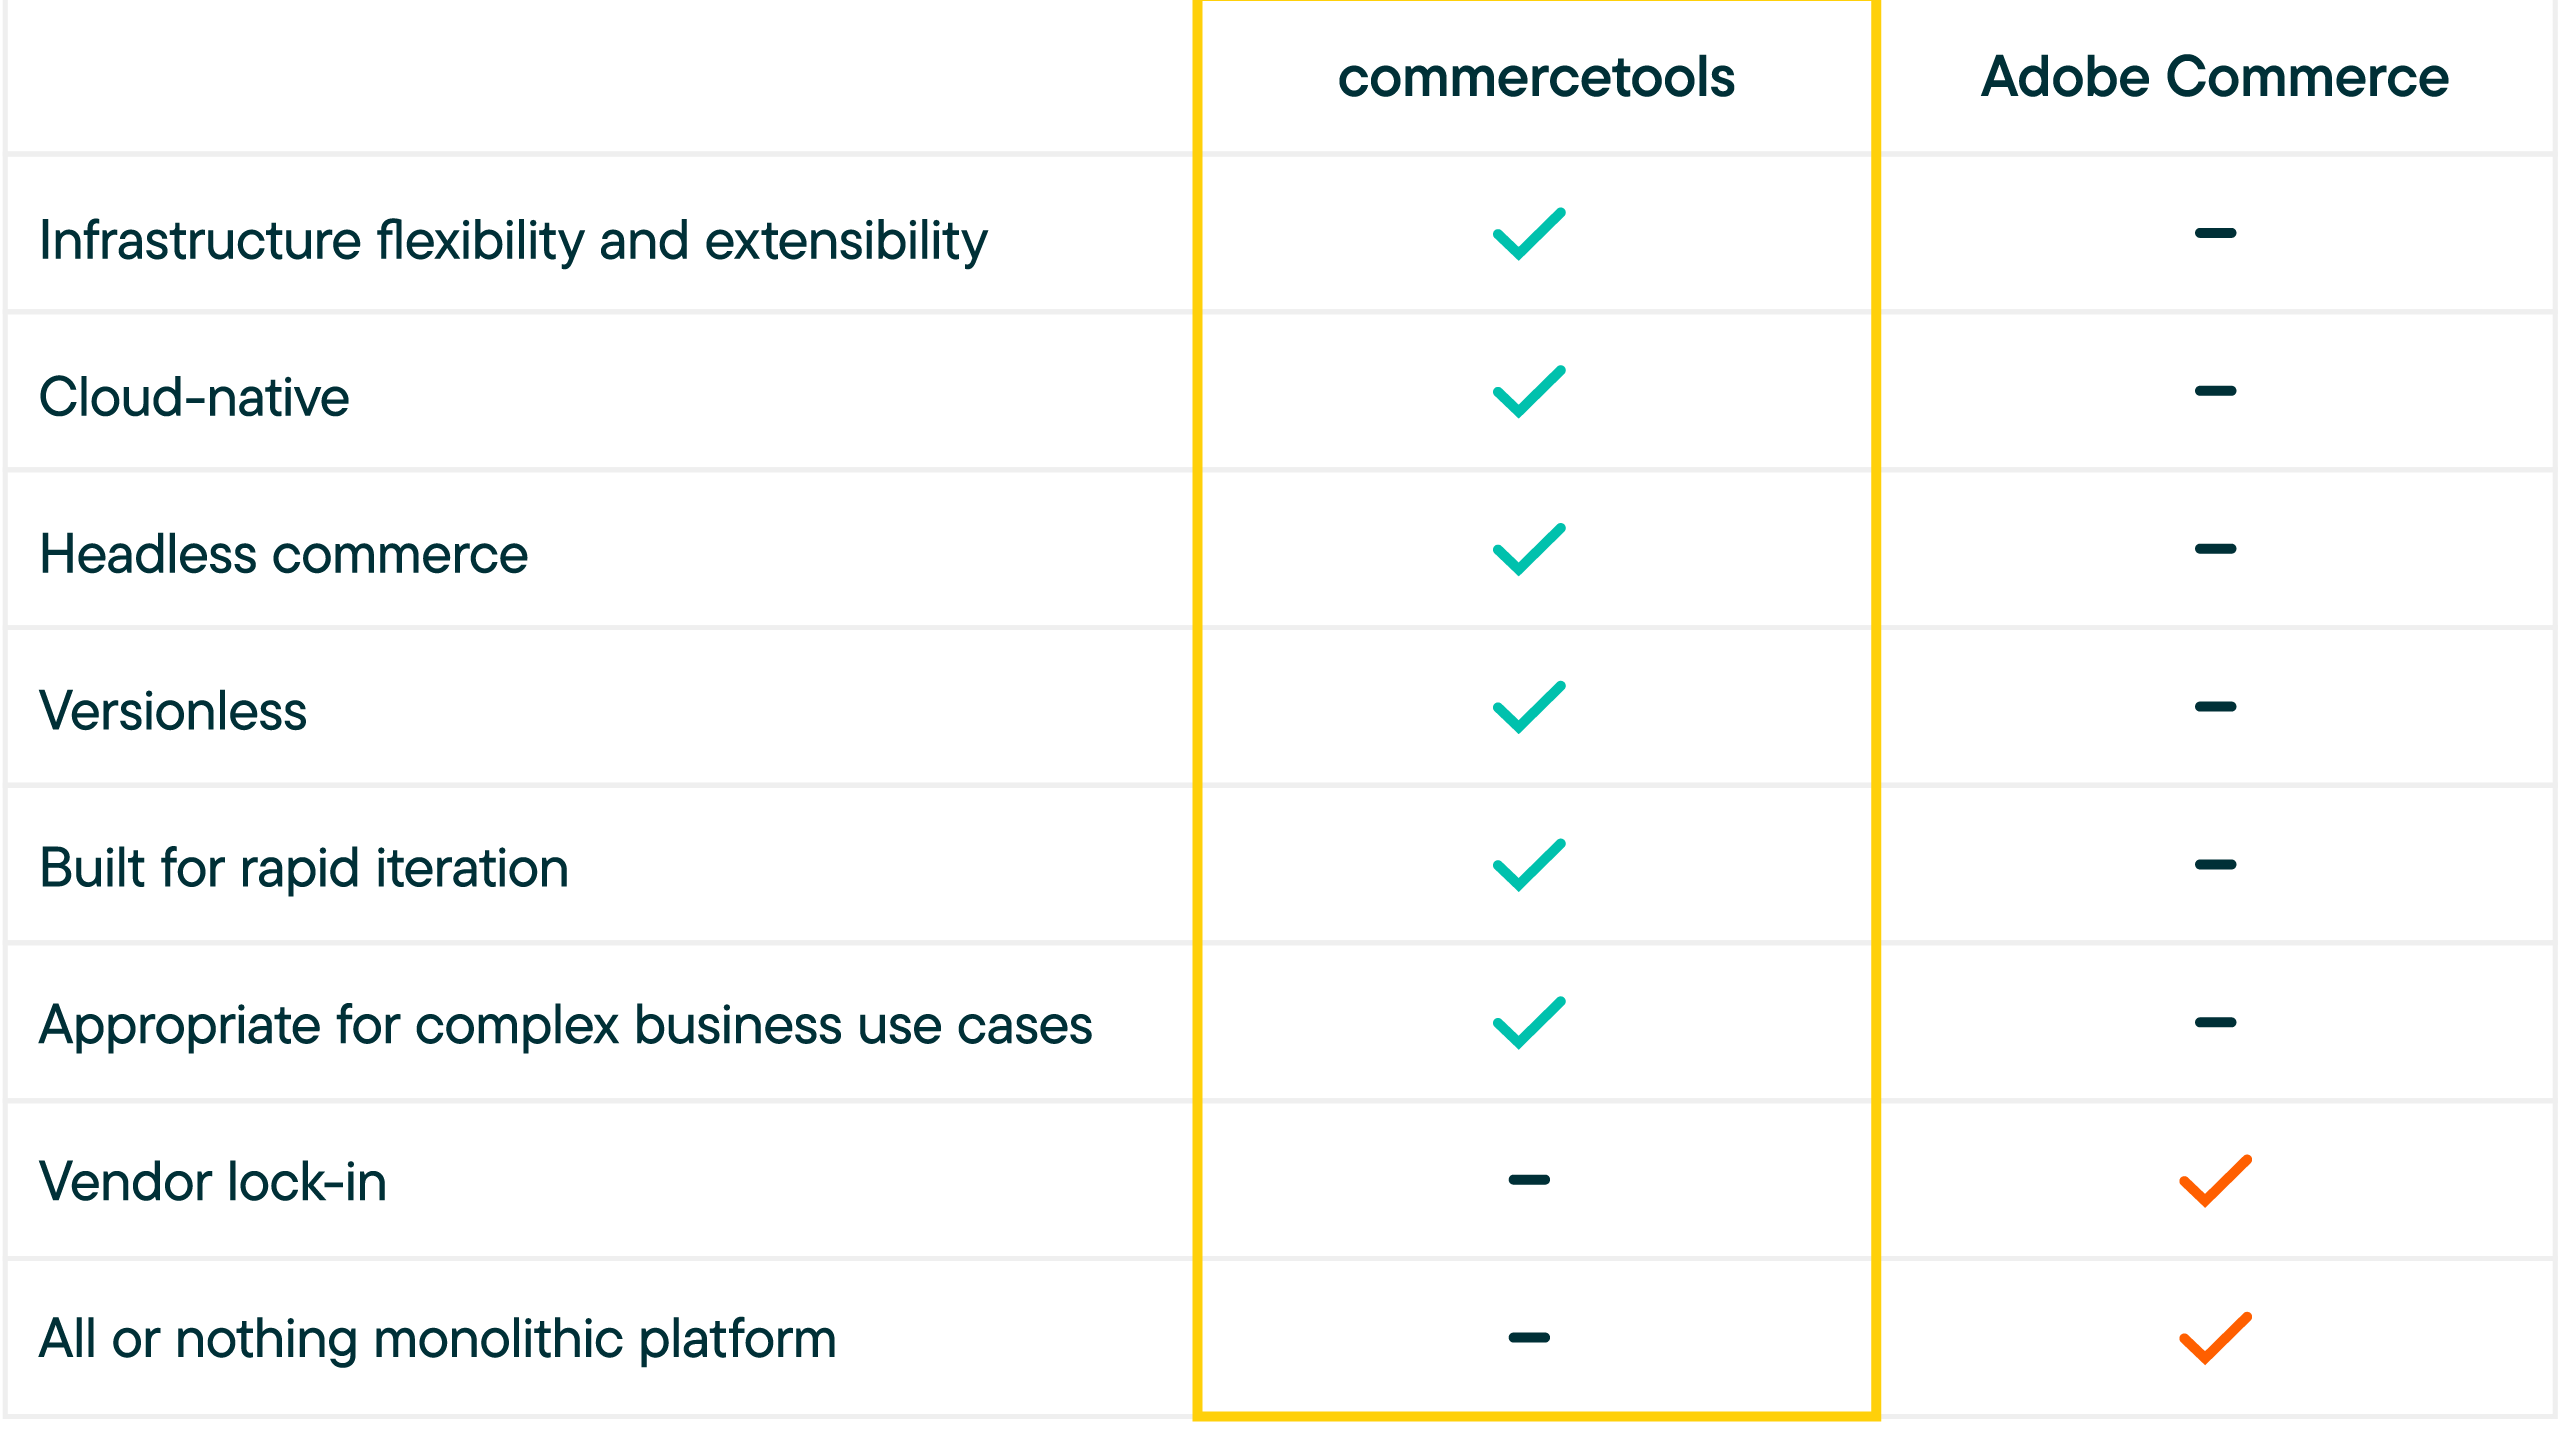 adobe commerce commercetools comparison table